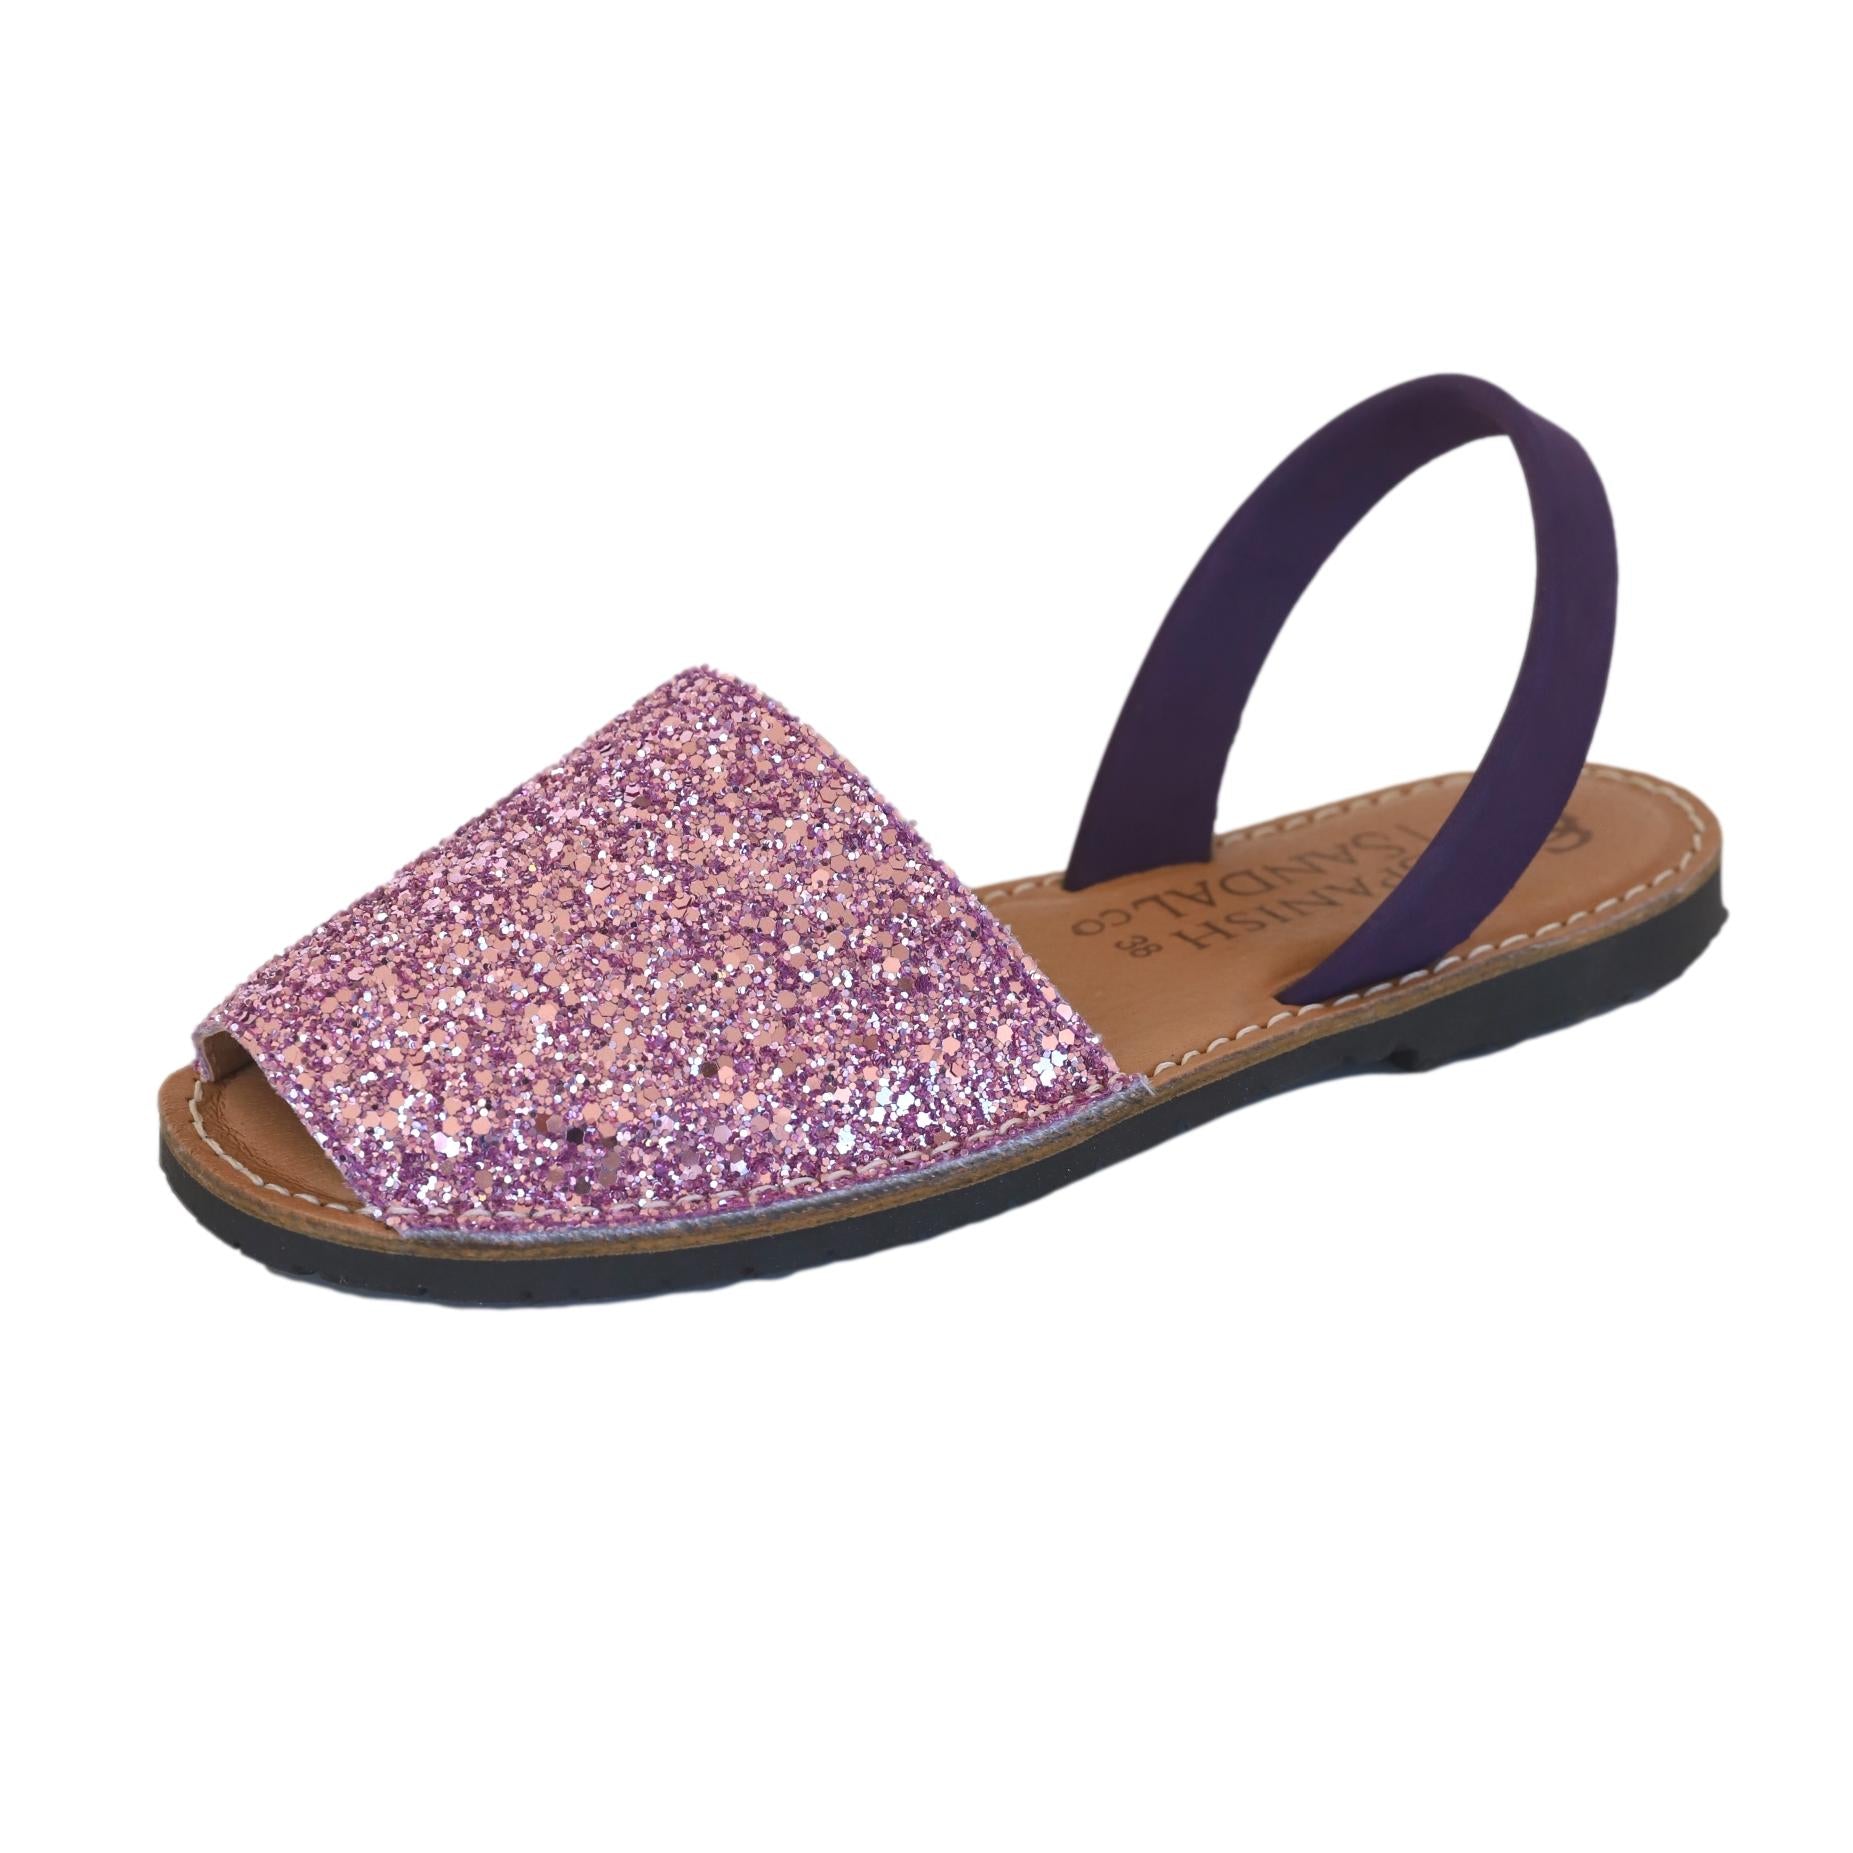 Pink sparkly flat sandals